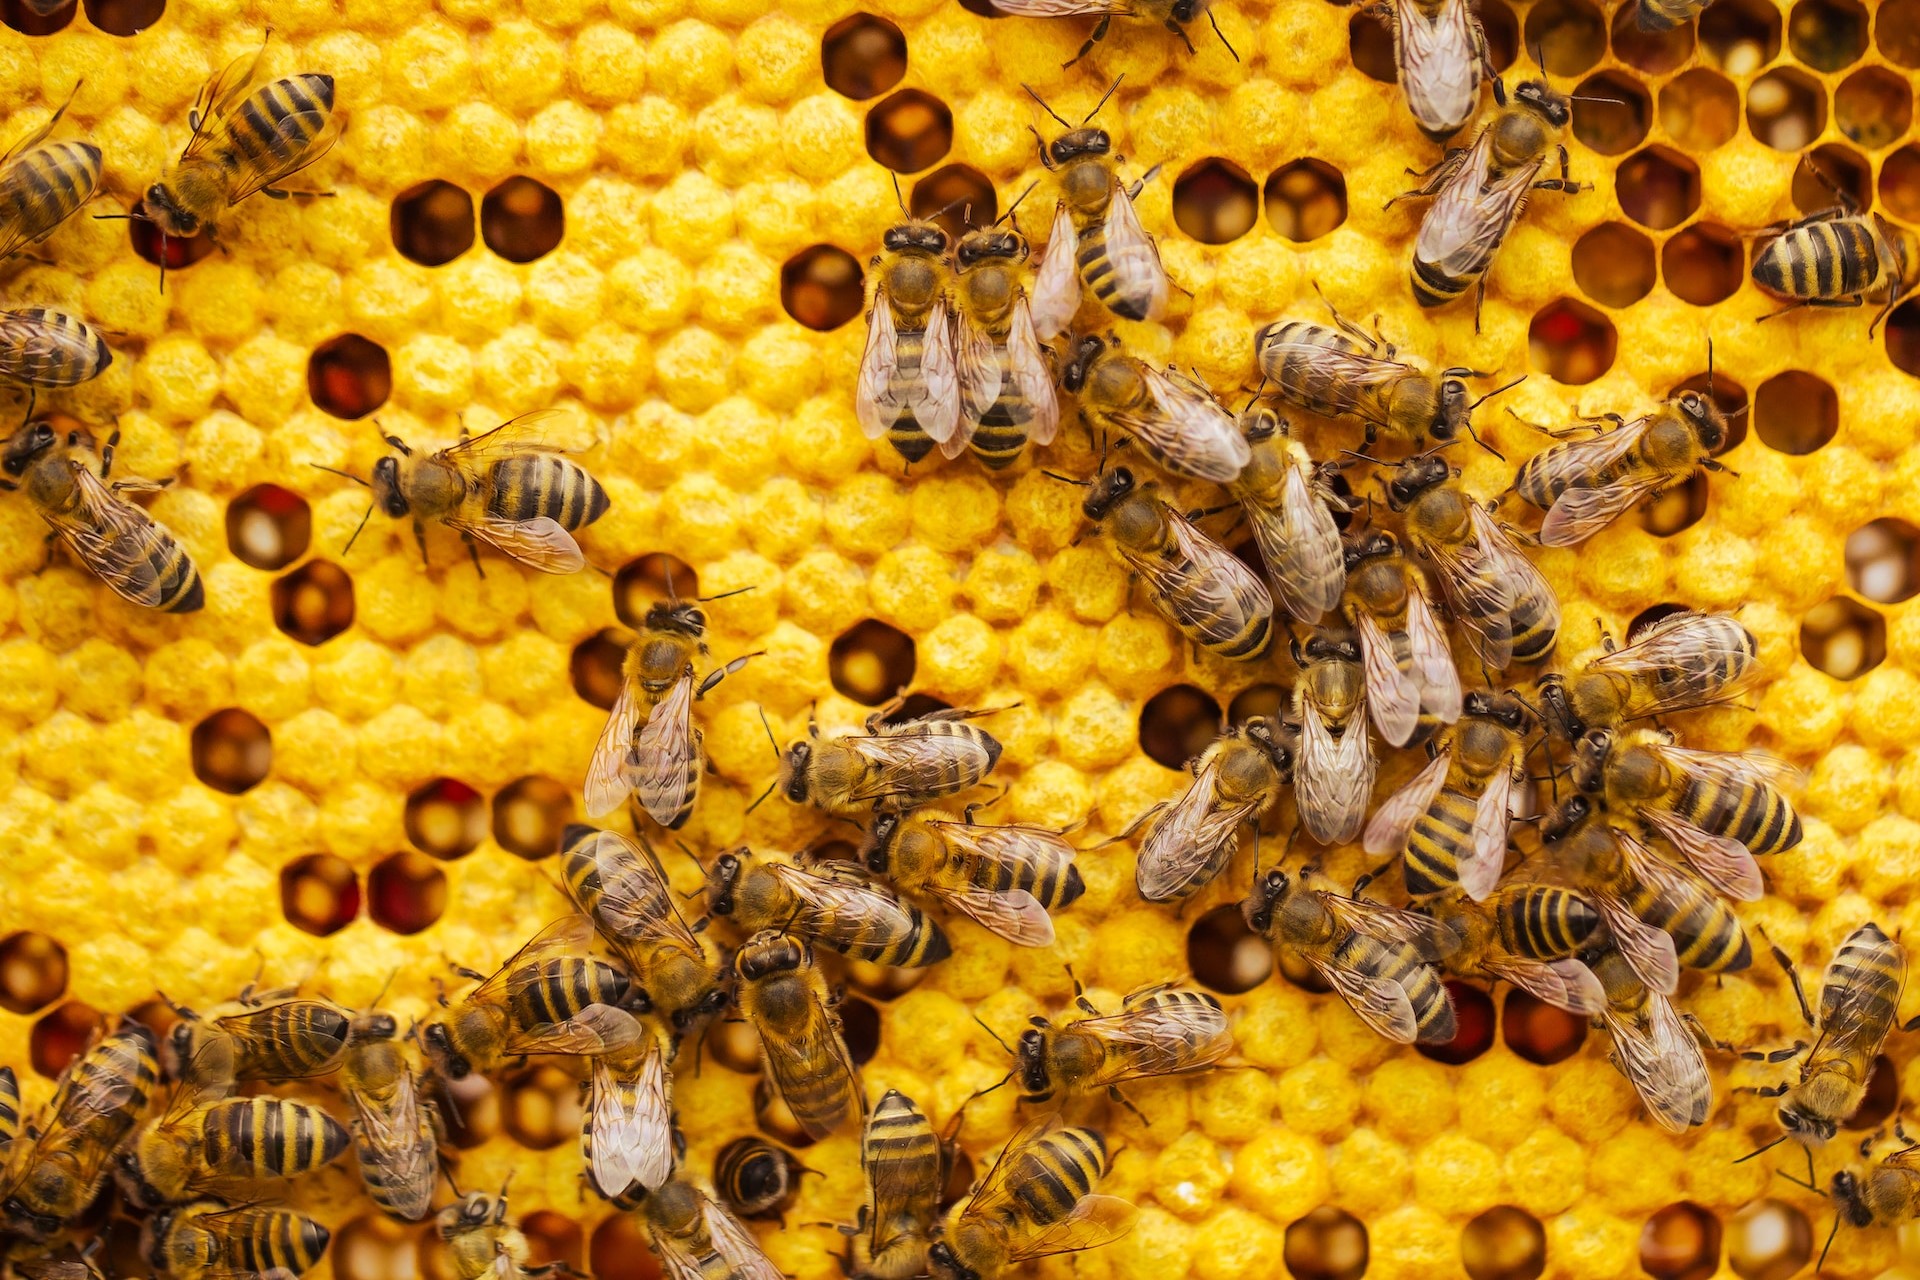 Honeybees on their hive.